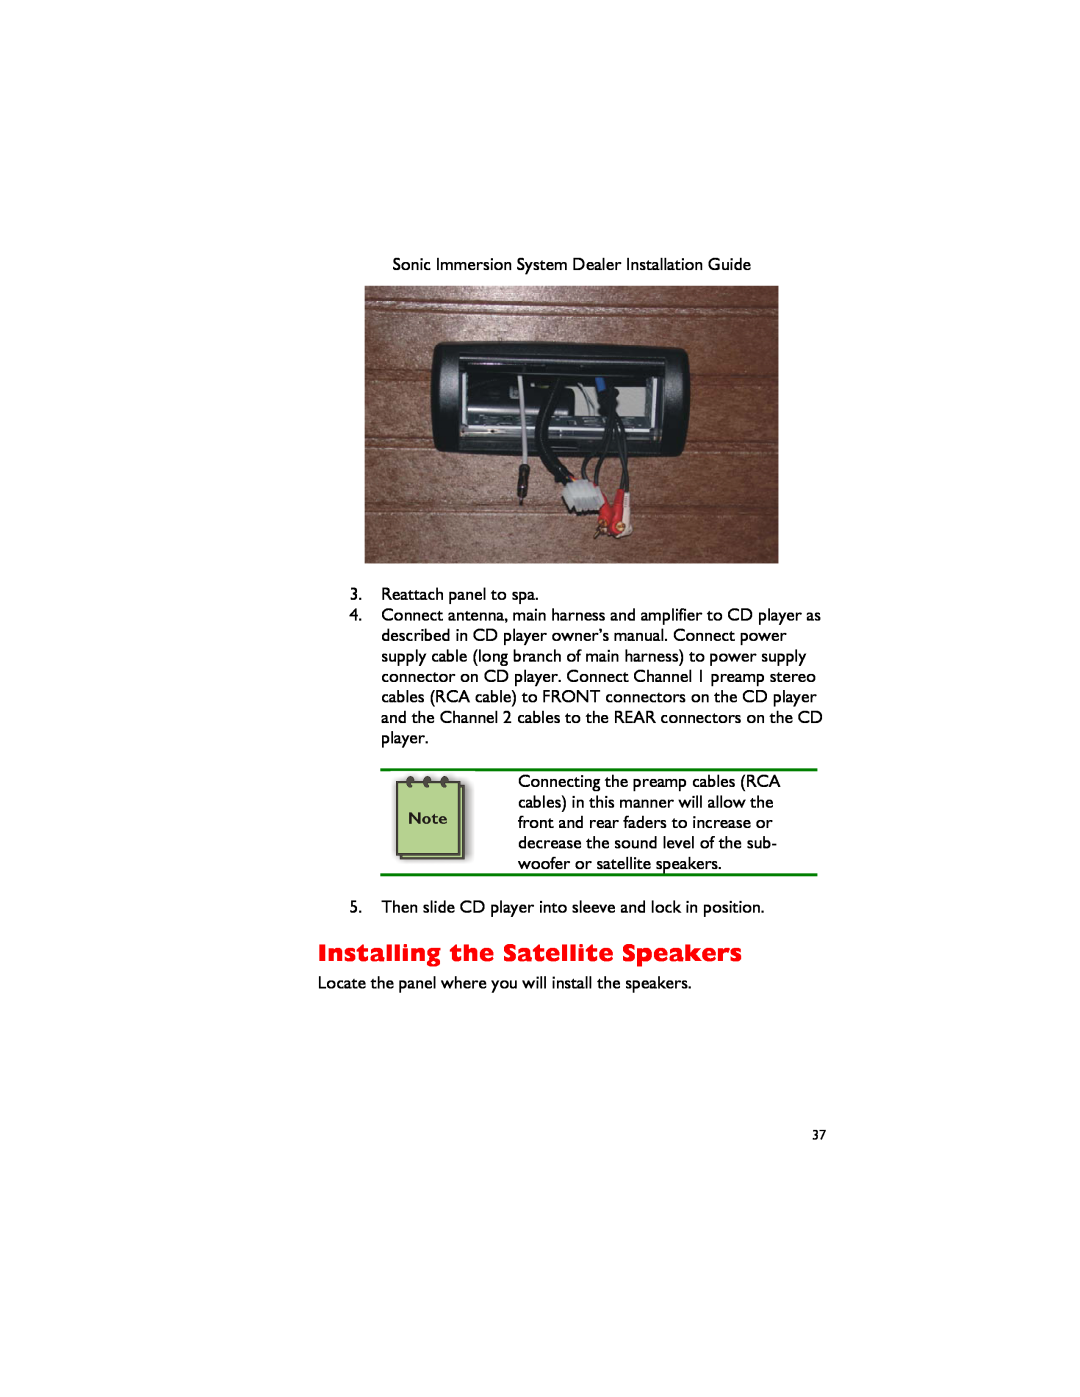 Dimension One Spas 01510-1030 manual Installing the Satellite Speakers 